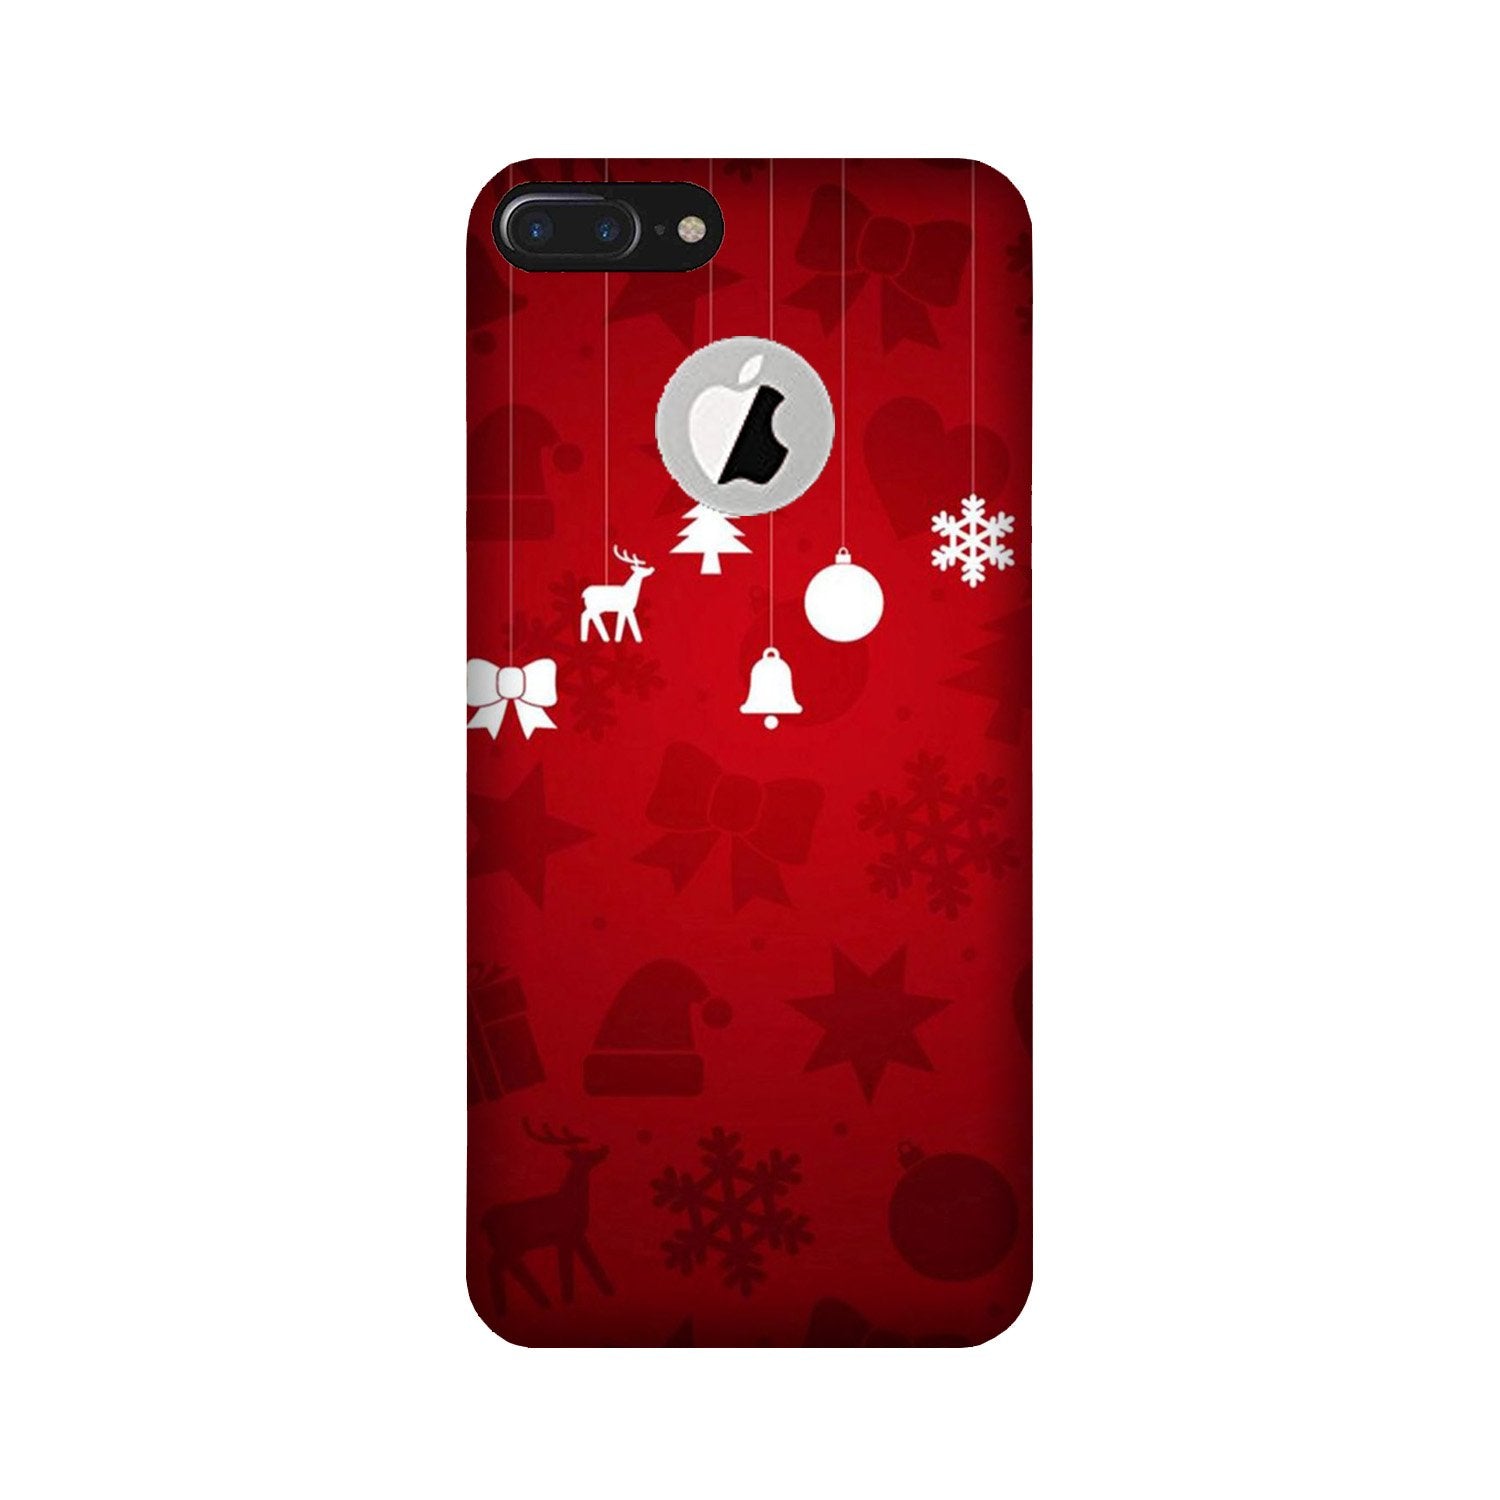 Christmas Case for iPhone 7 Plus logo cut